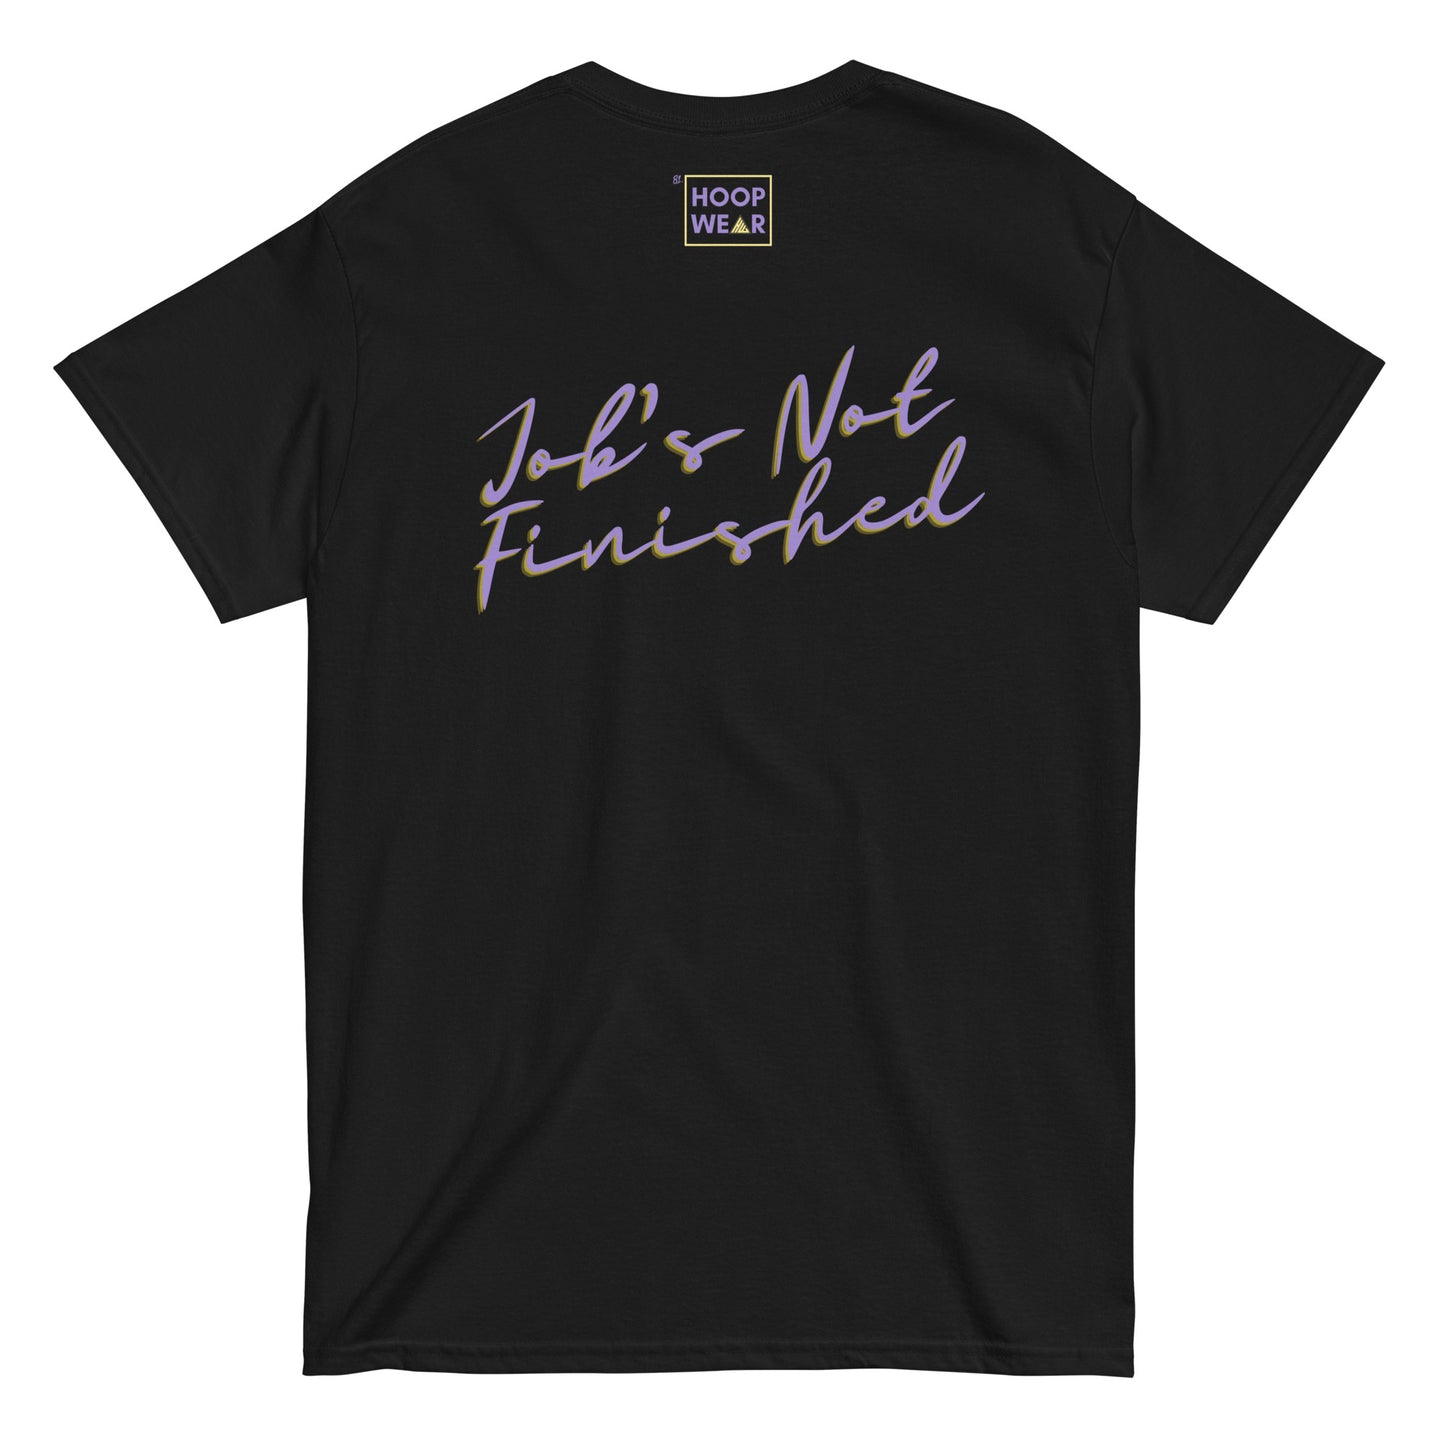 T-shirt “Job's Not Finished” - Noir